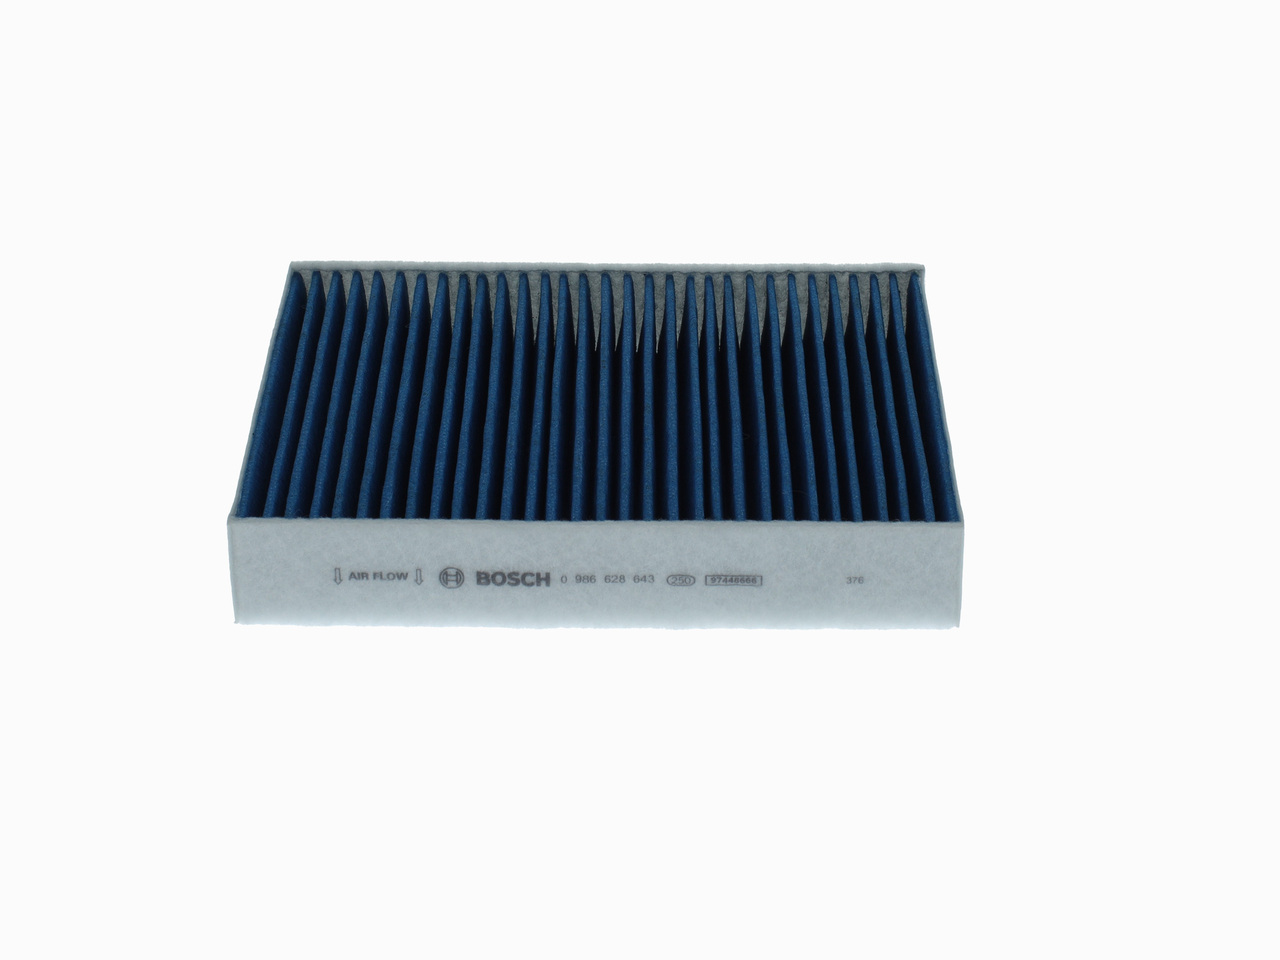 Original BOSCH A 8643 Air conditioner filter 0 986 628 643 for BMW 1 Series